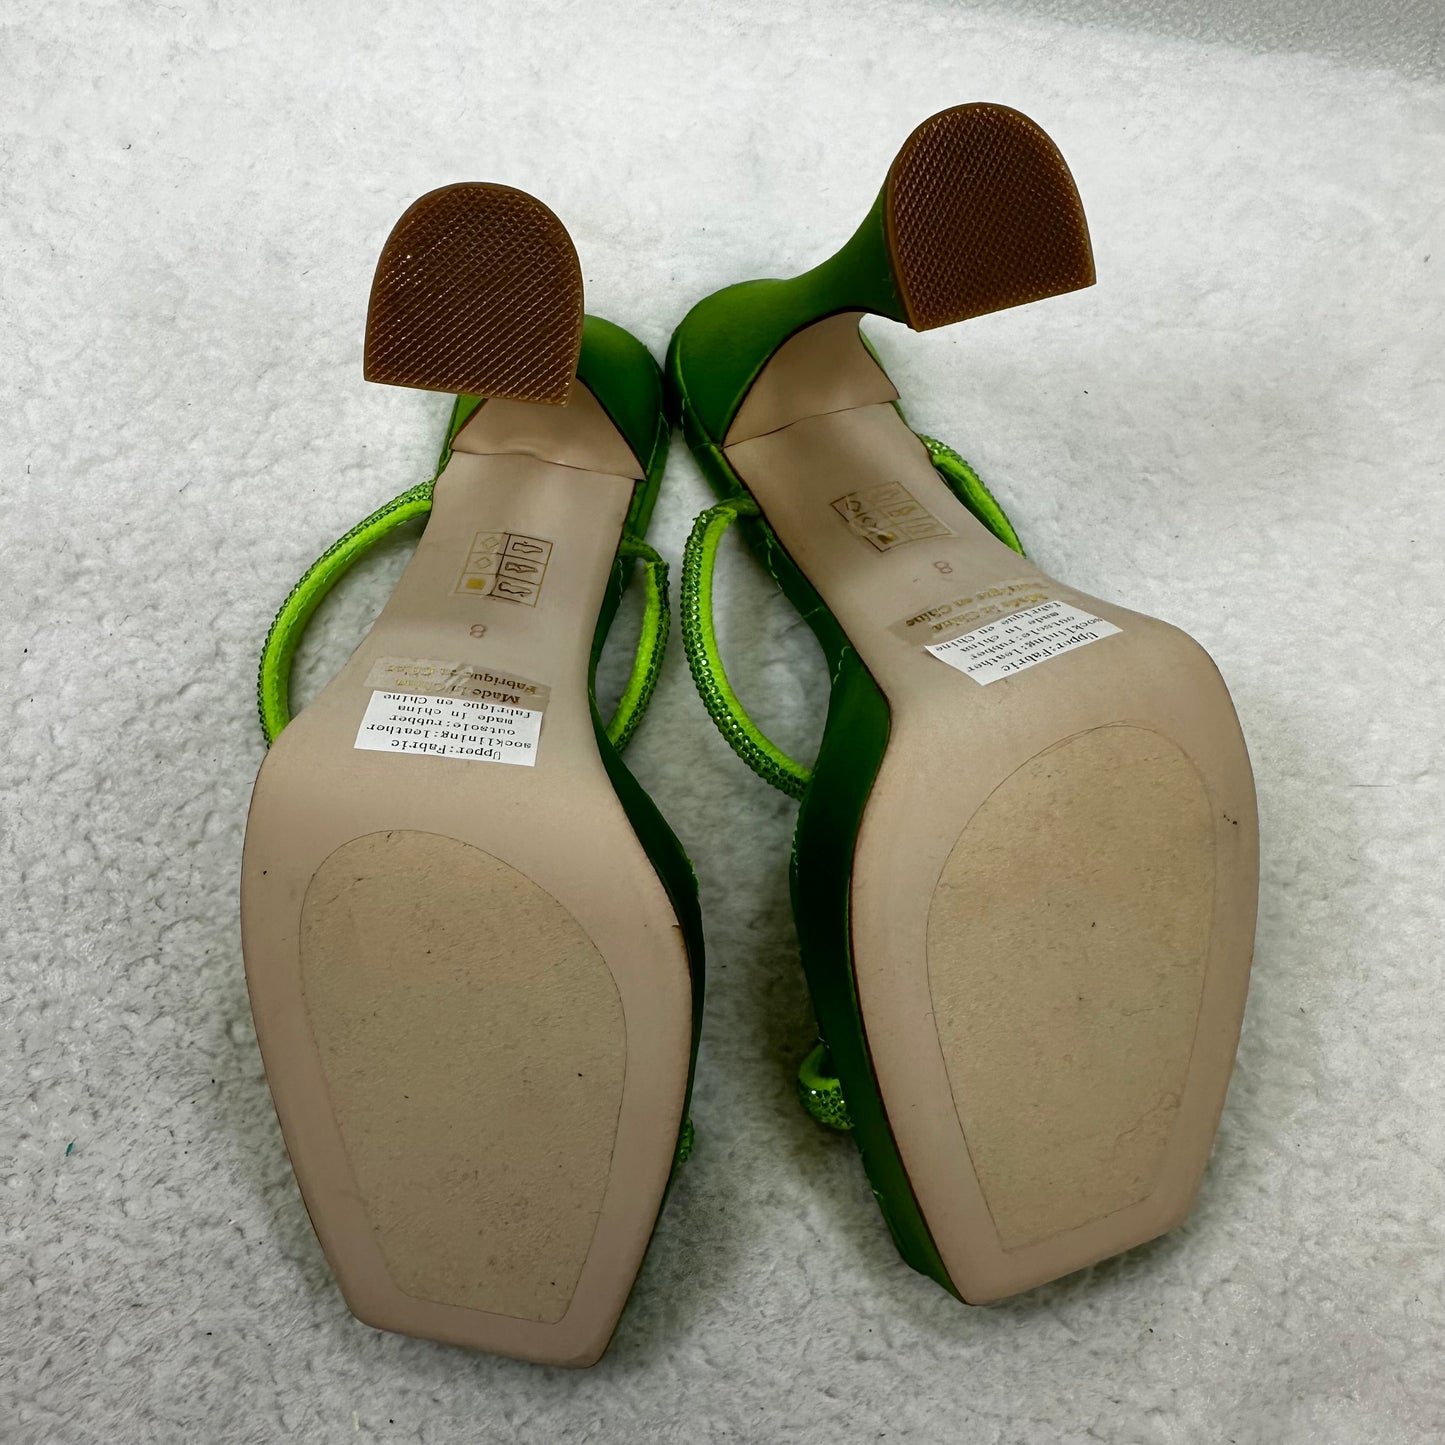 Green Shoes Heels Block Jeffery Campbell, Size 8